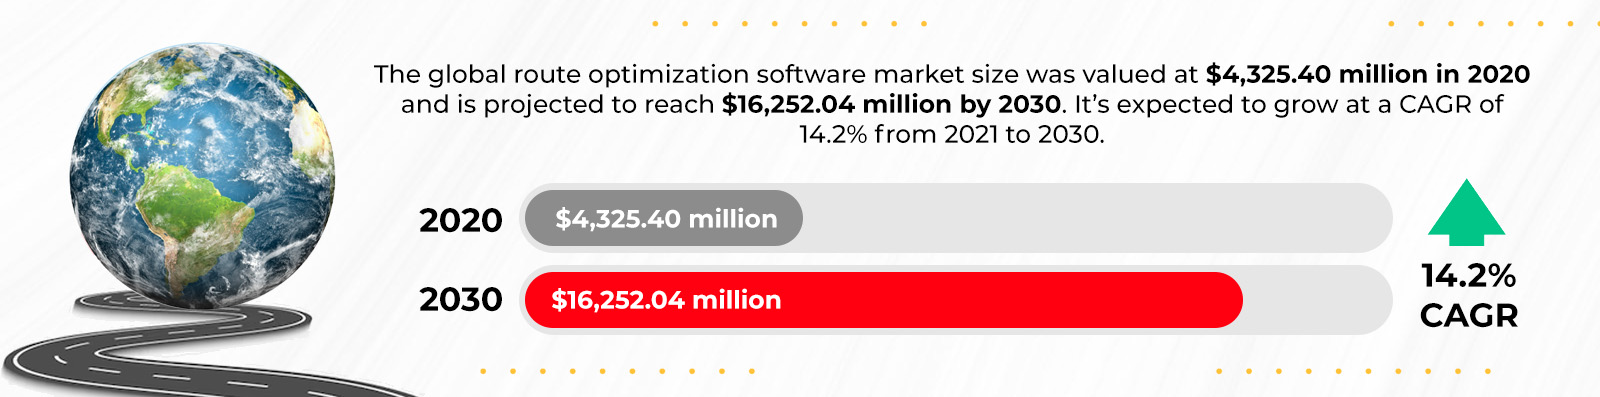 route optimization software market size stats